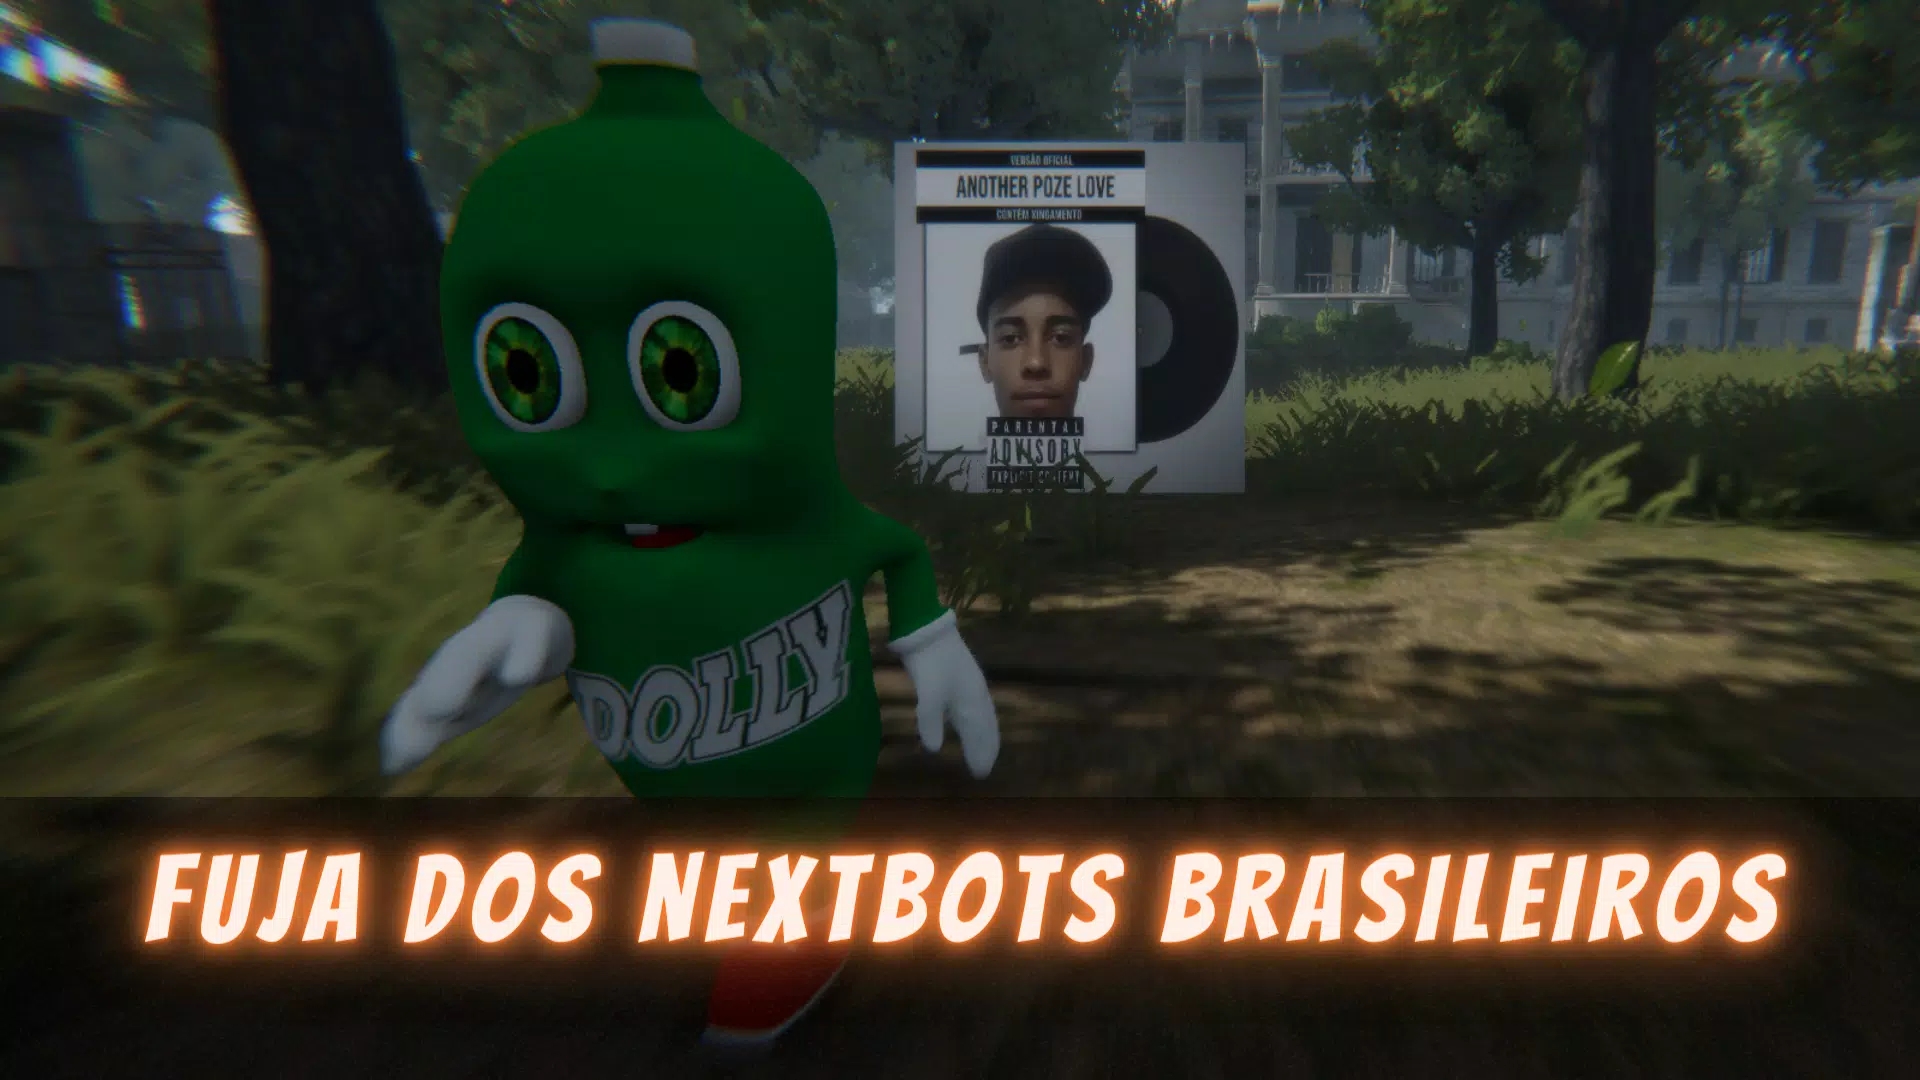 ģBR(Nextbots memes BR)ͼ